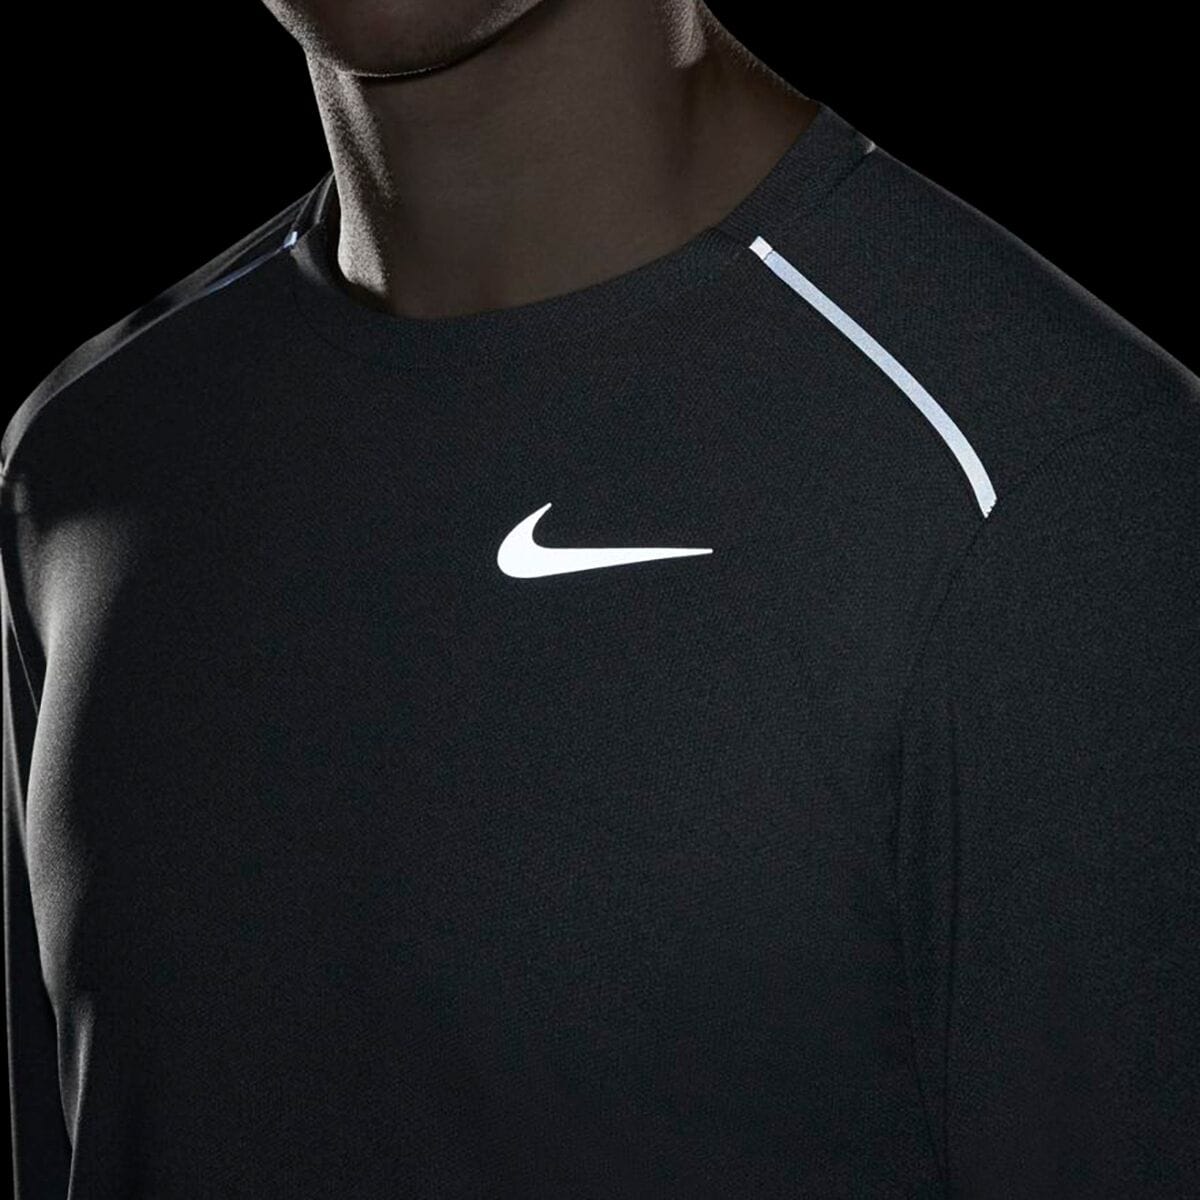 Nike Element 3.0 Crew Shirt - Men's | Backcountry.com